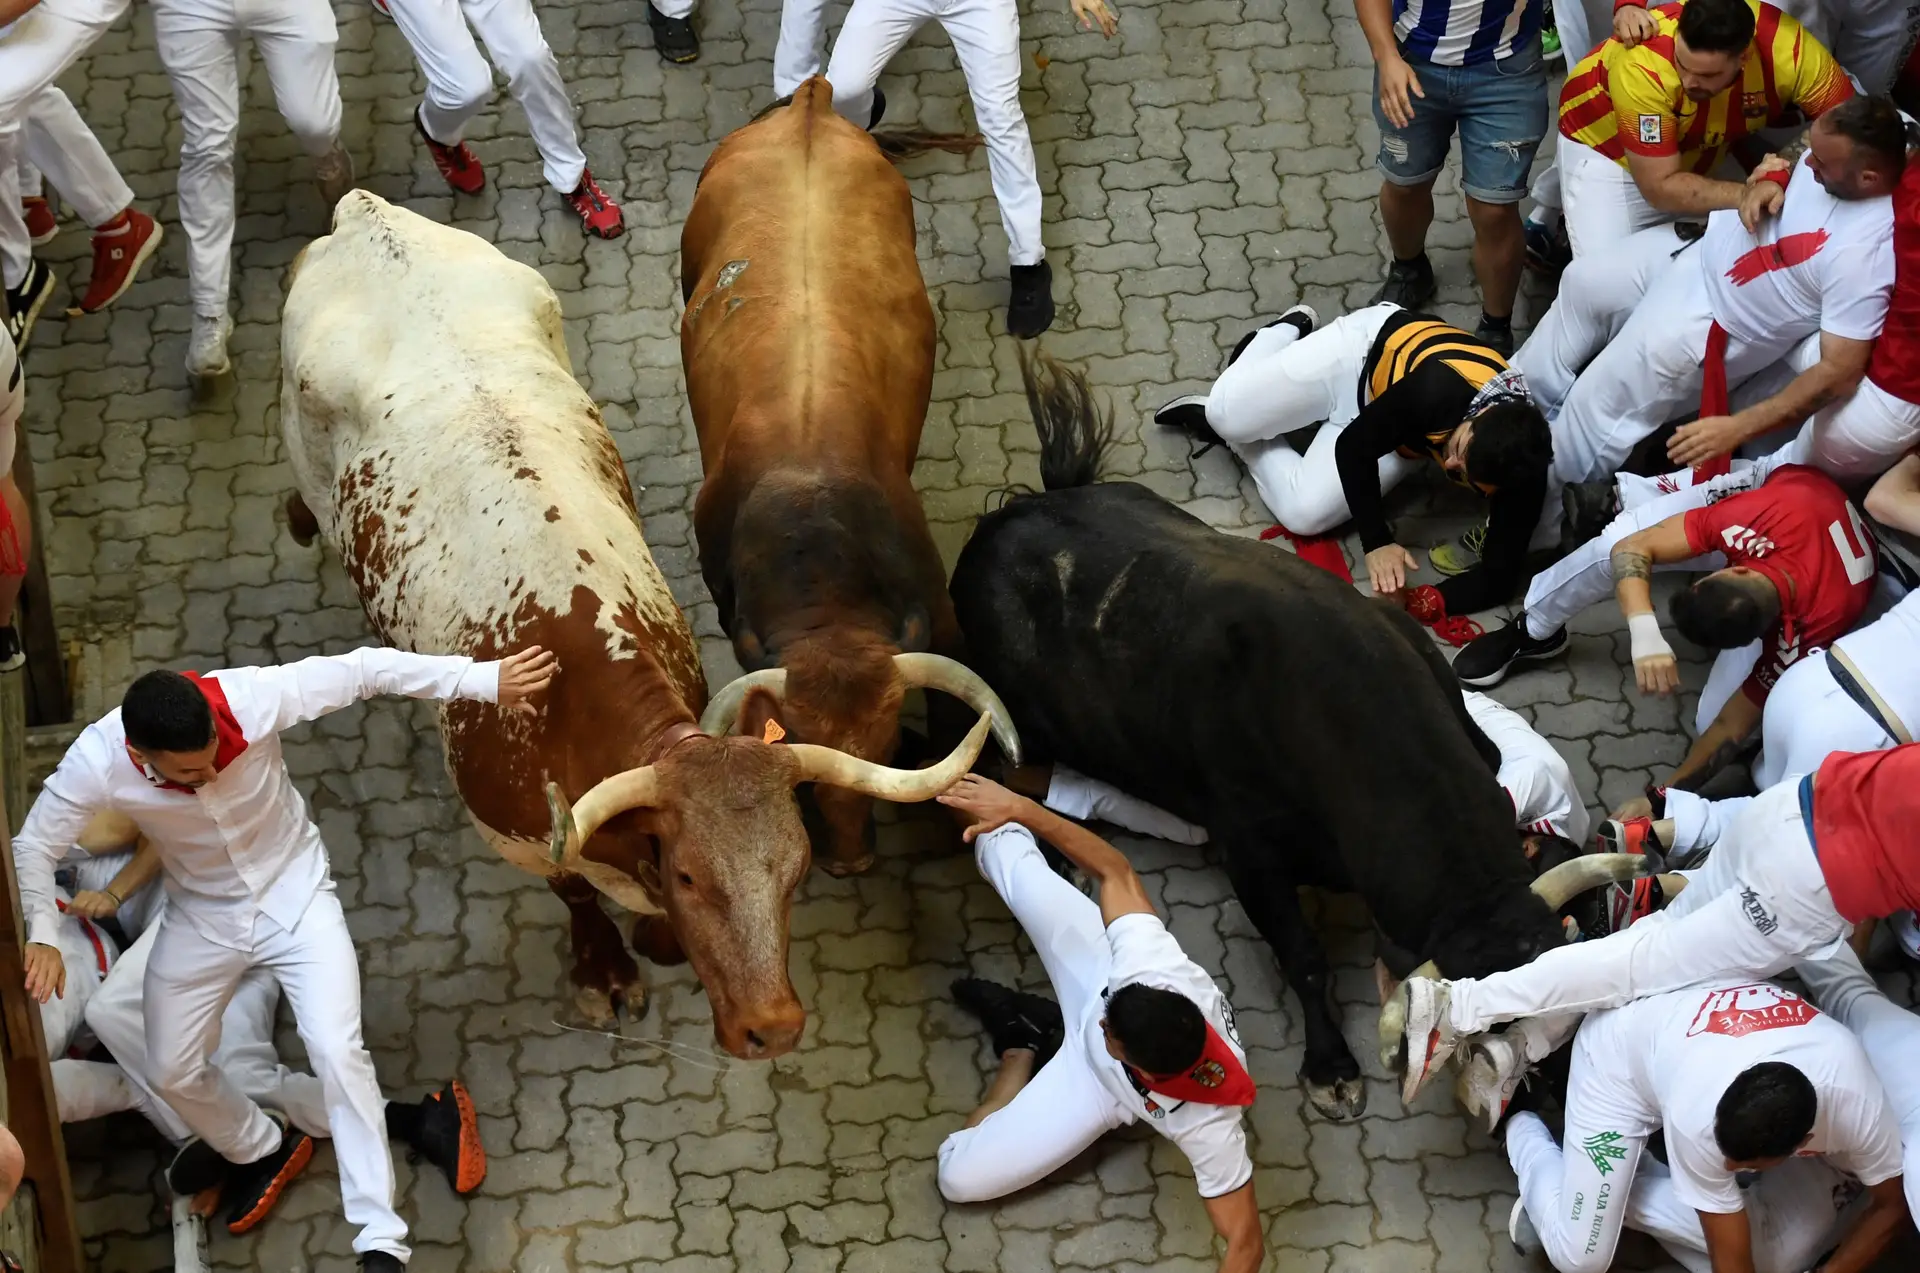 San Fermin - corrida de touros em Pamplona - Tauromania